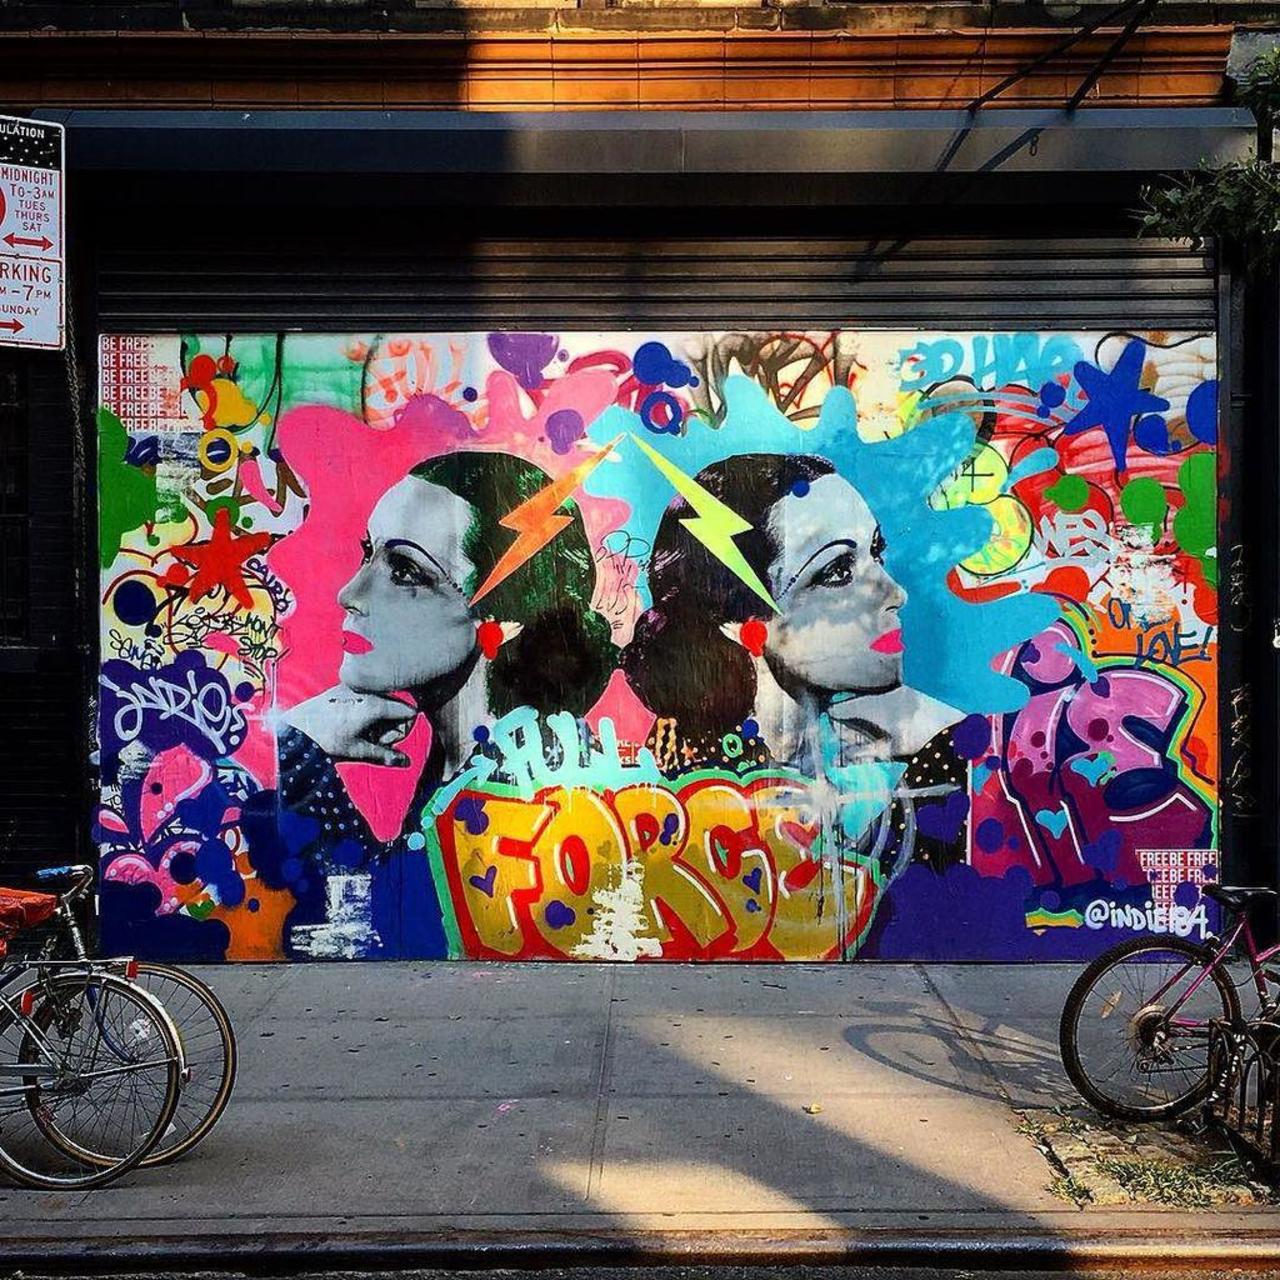 Lower East Side, Orchard I think... #graffiti #stencilart #art #streetart #wallporn #wall #pasteup #mural #urbanwal… http://t.co/BoaTExlxa1